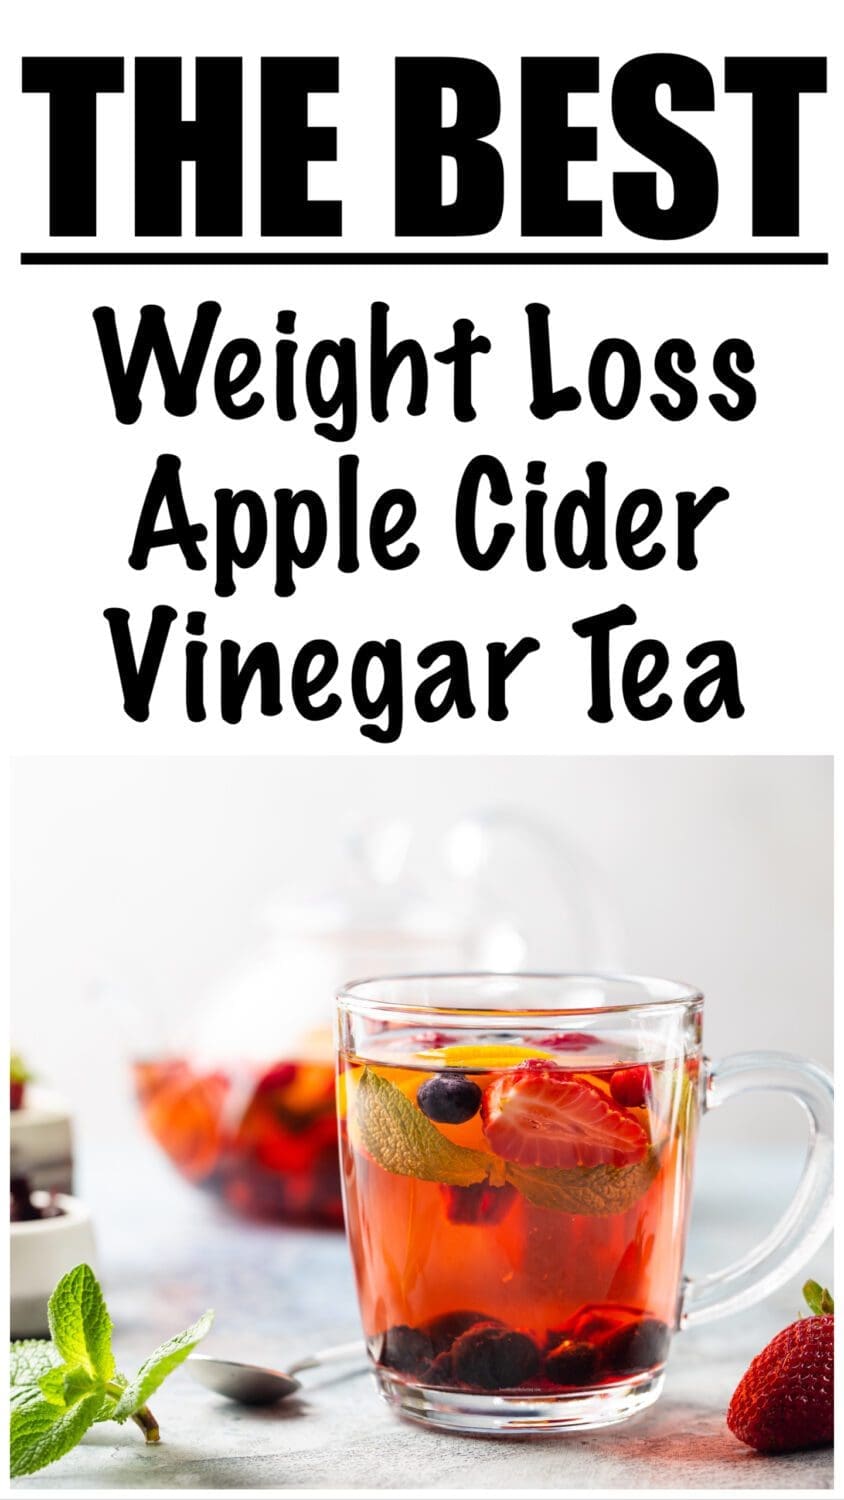 Cranberry and Apple Cider Vinegar Tea